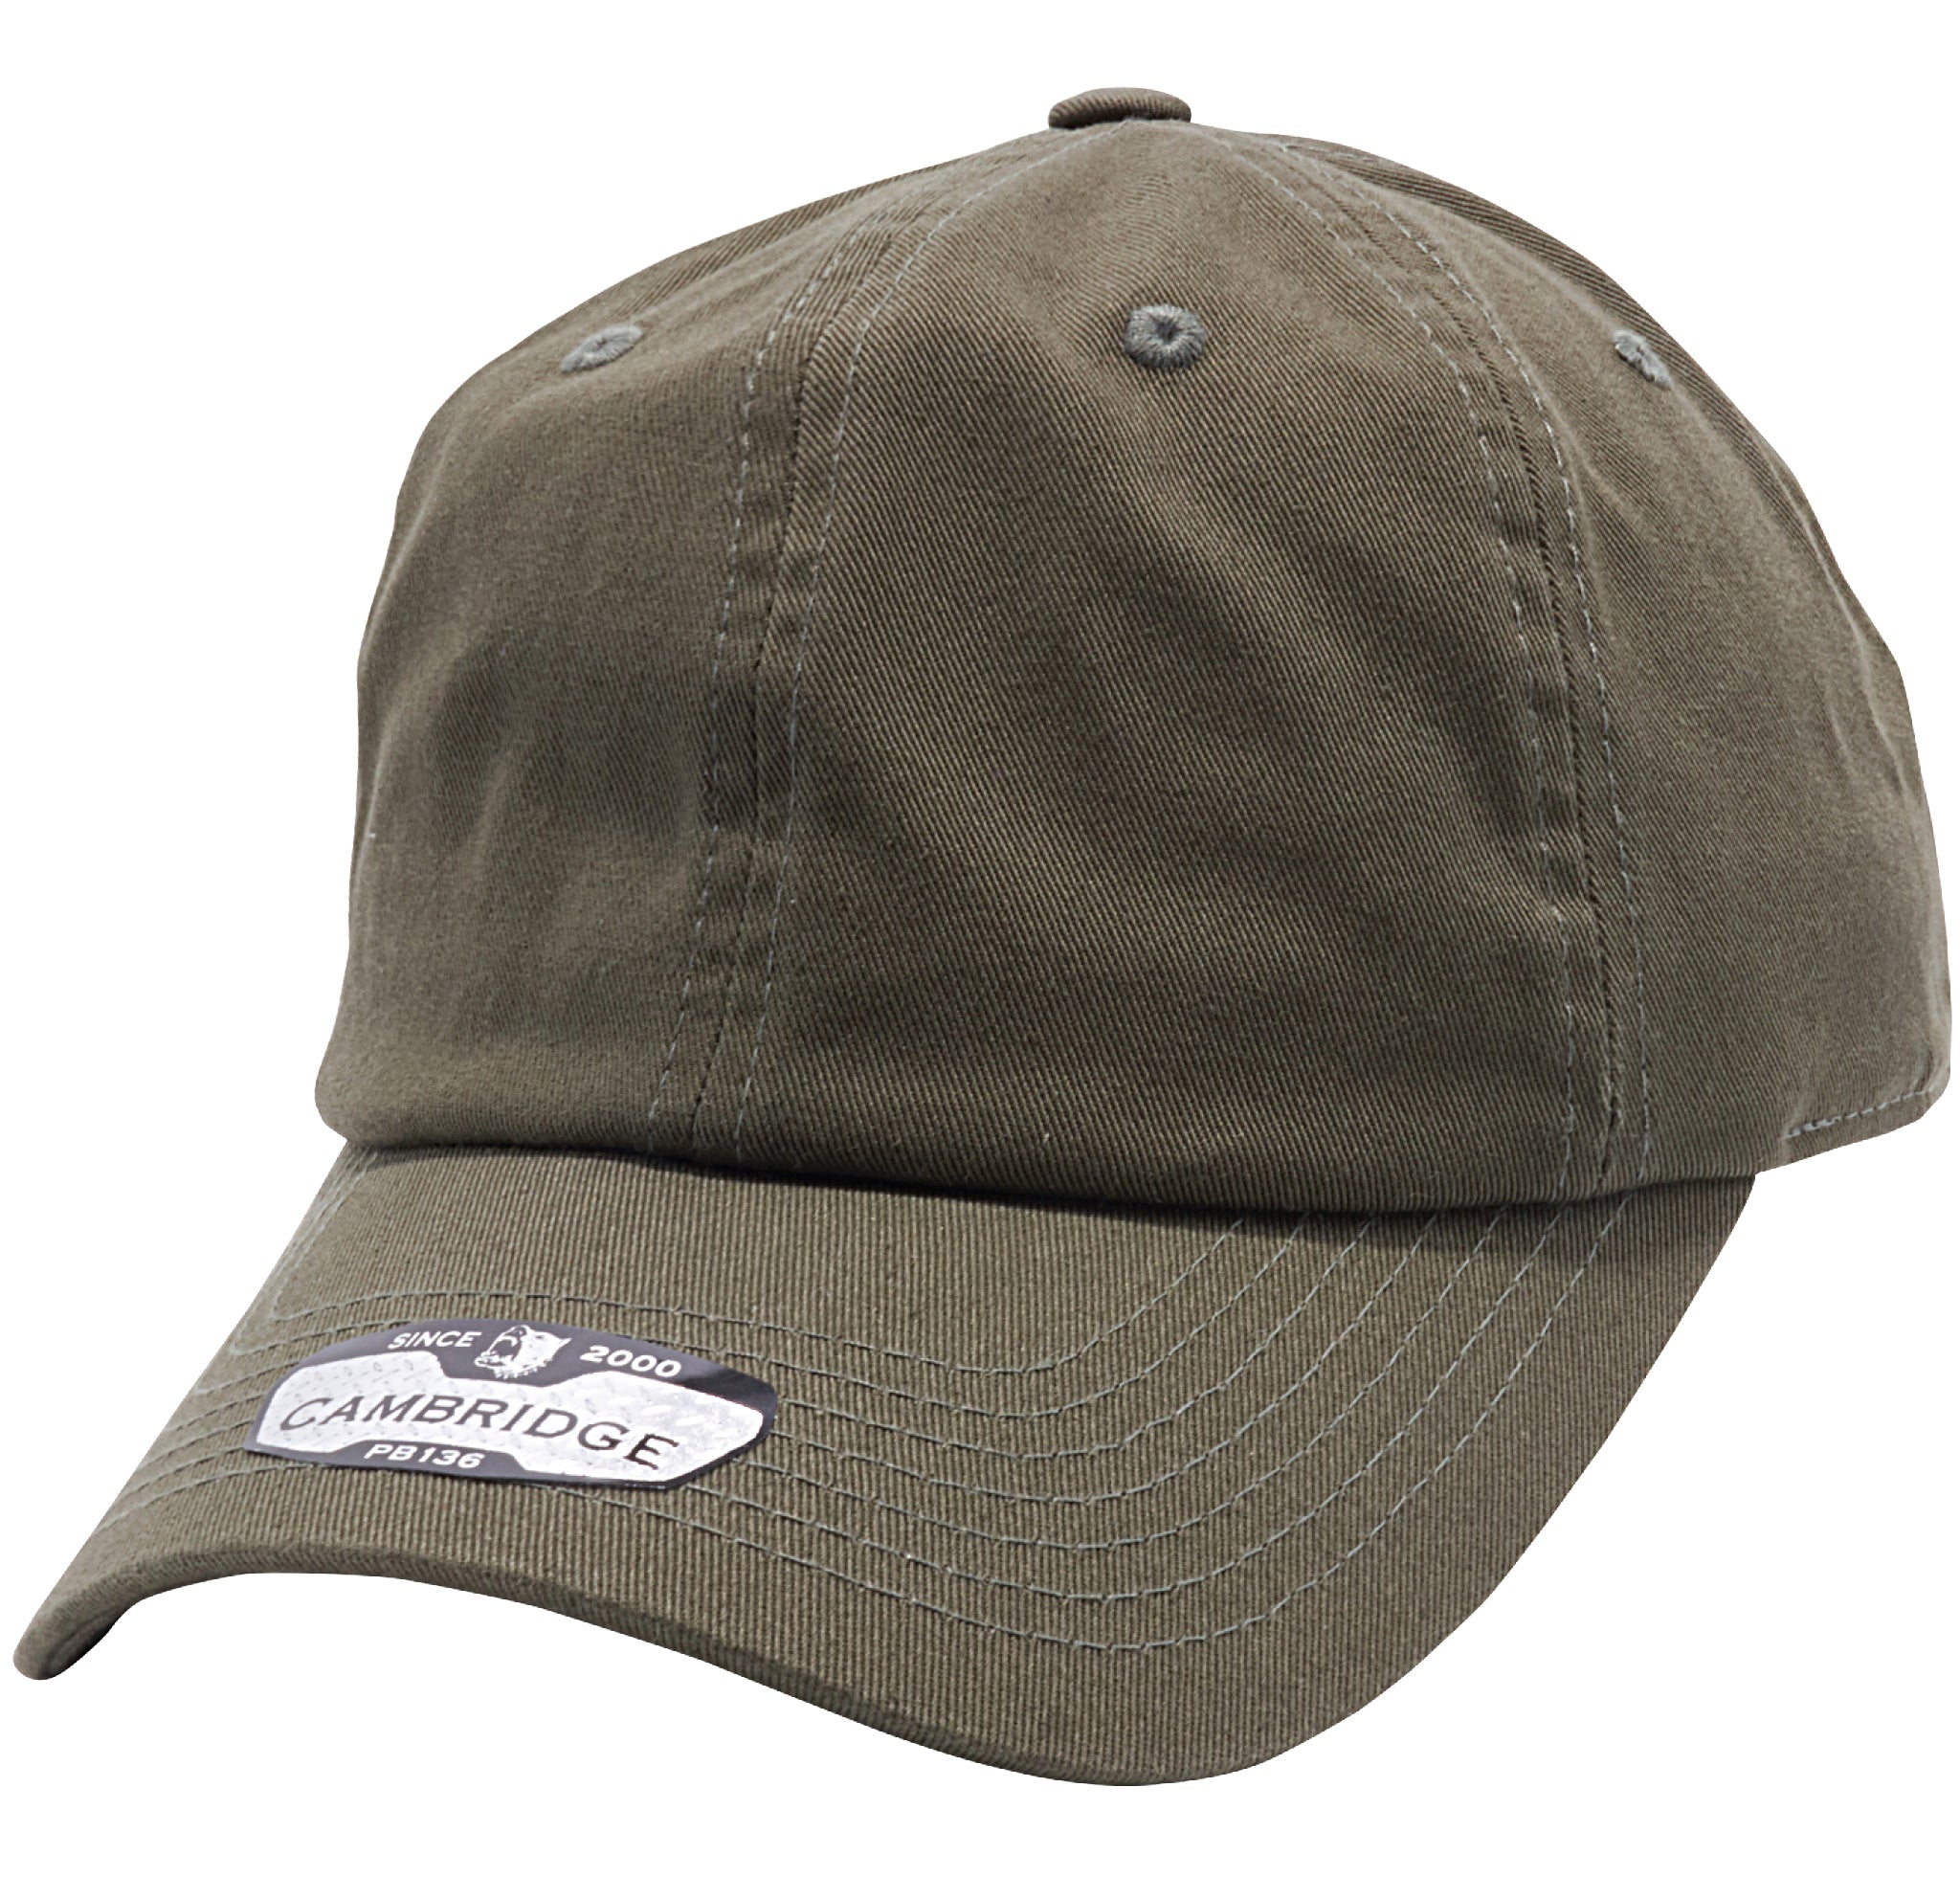 PB136 Pit Bull Cotton Twill Dad Hat [Olive] – CHOICE CAP, INC.